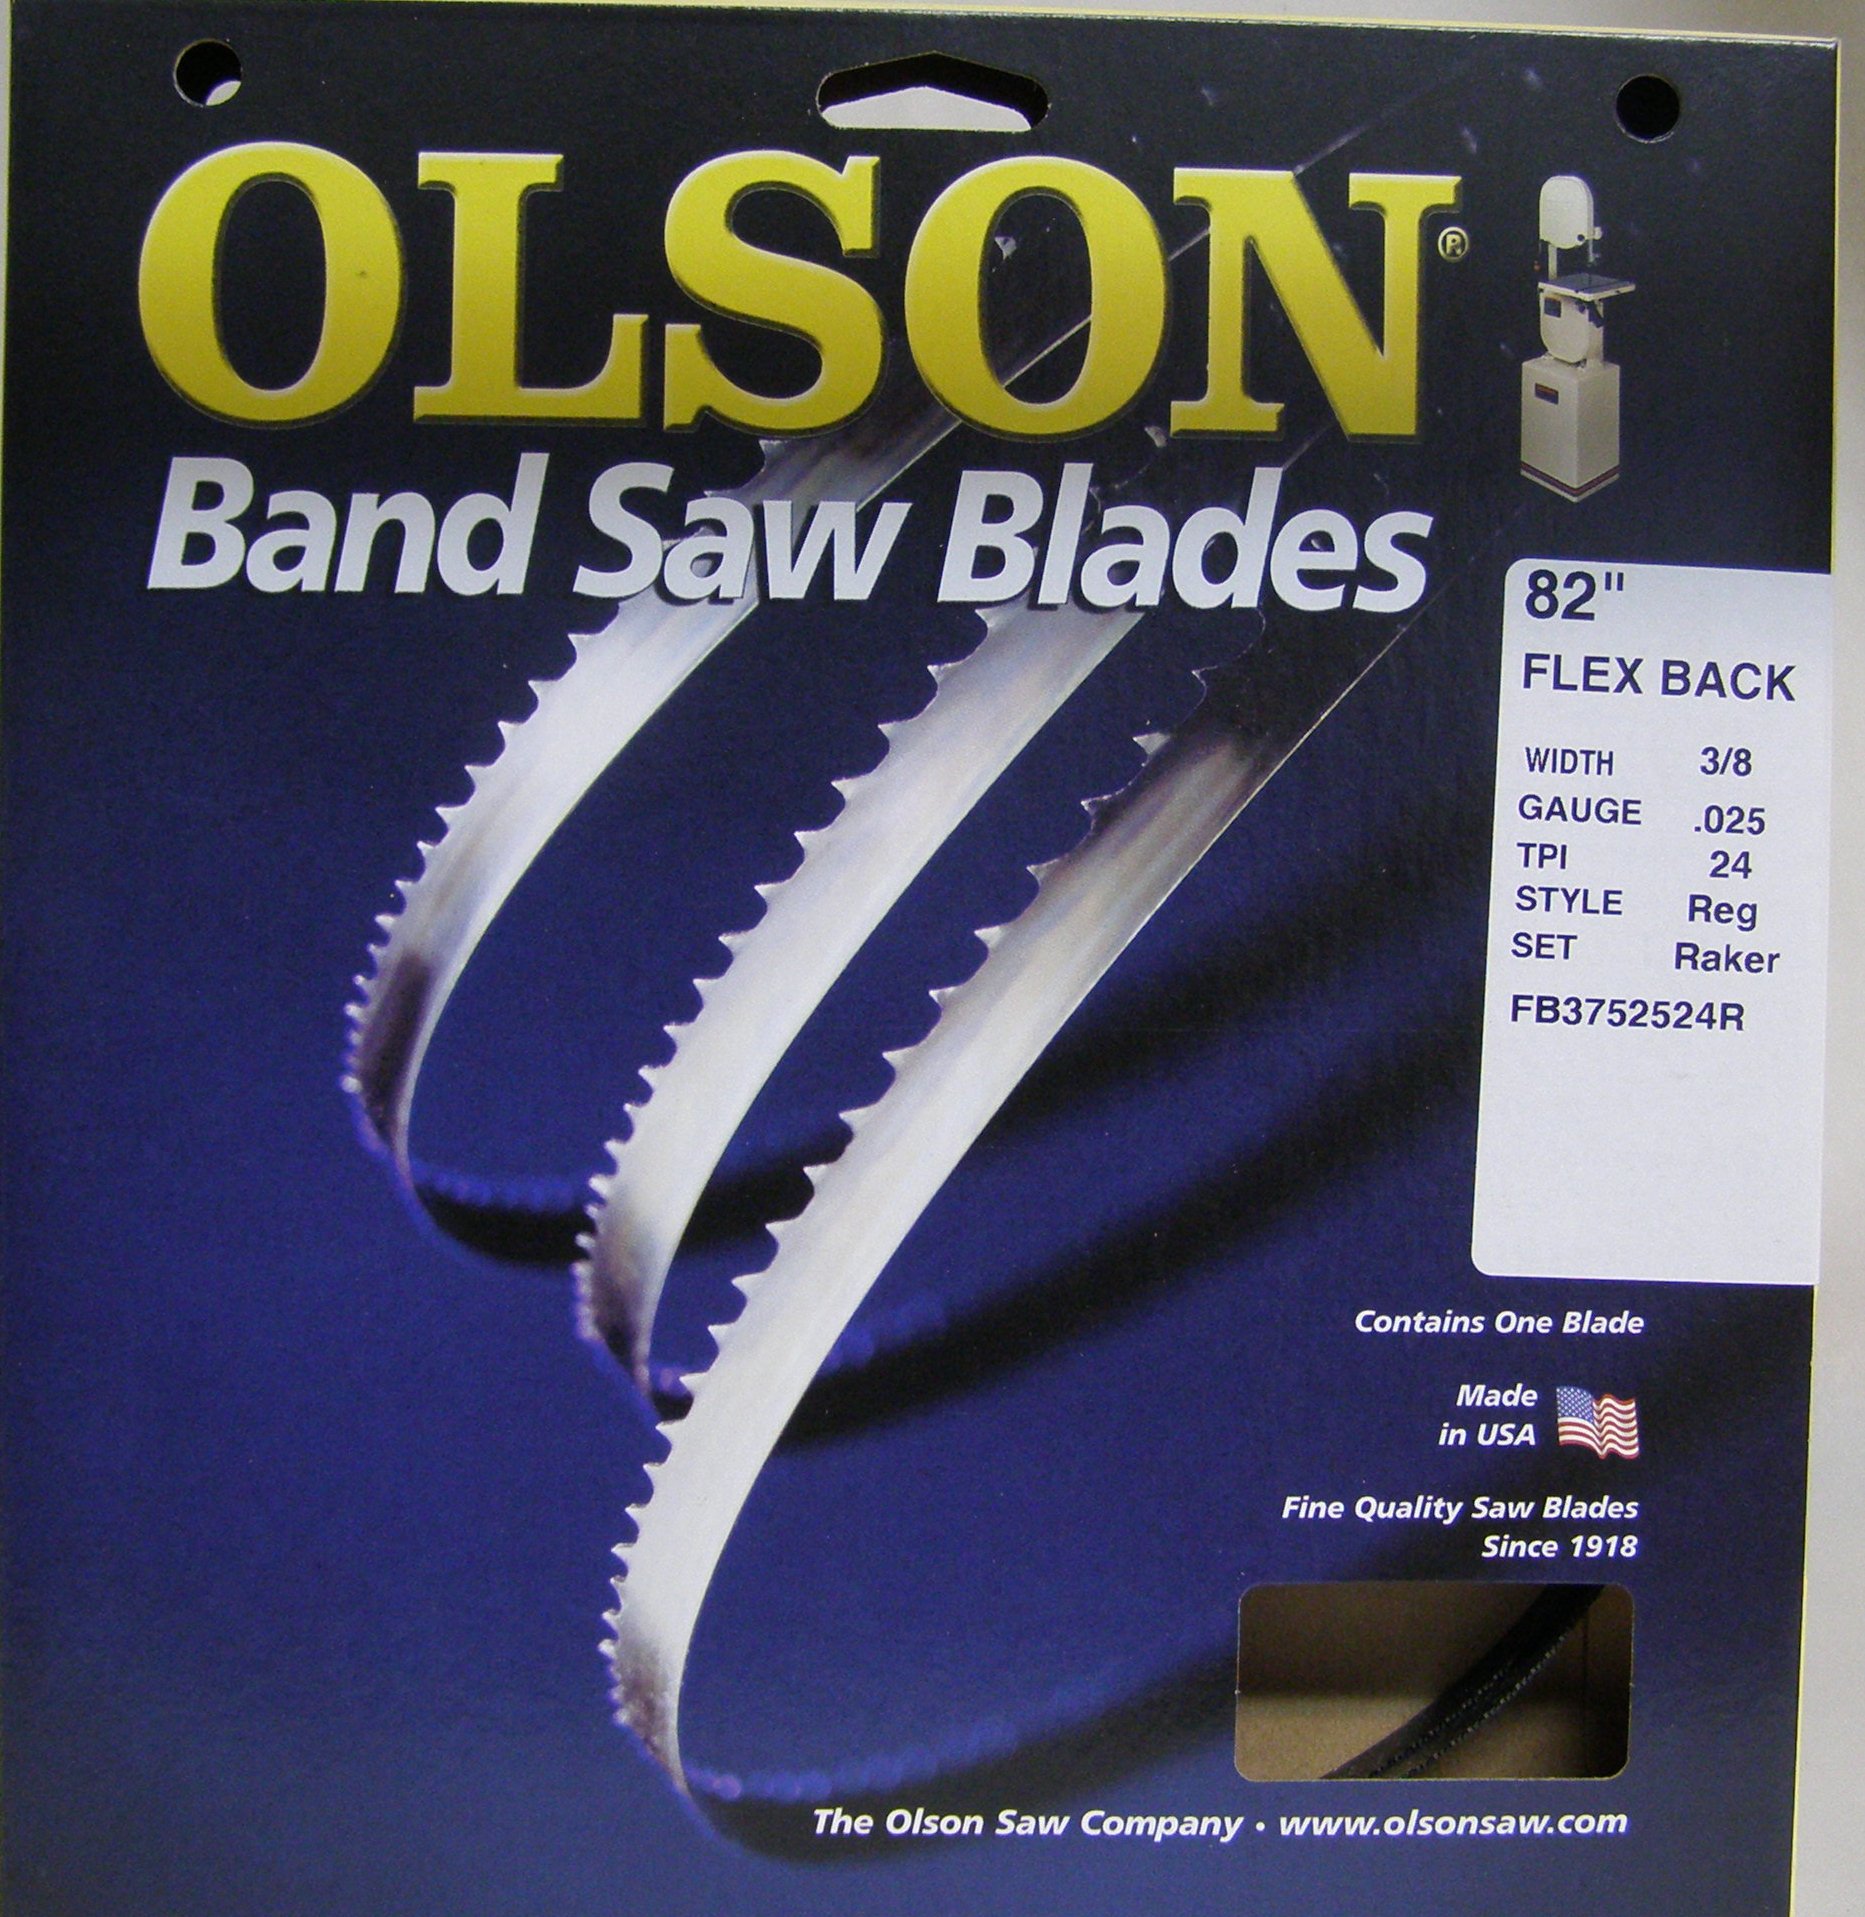 Olson Hard Edge Flex Back 82" x 3/8" x .025" 24 TPI Style Regular FB3752524R